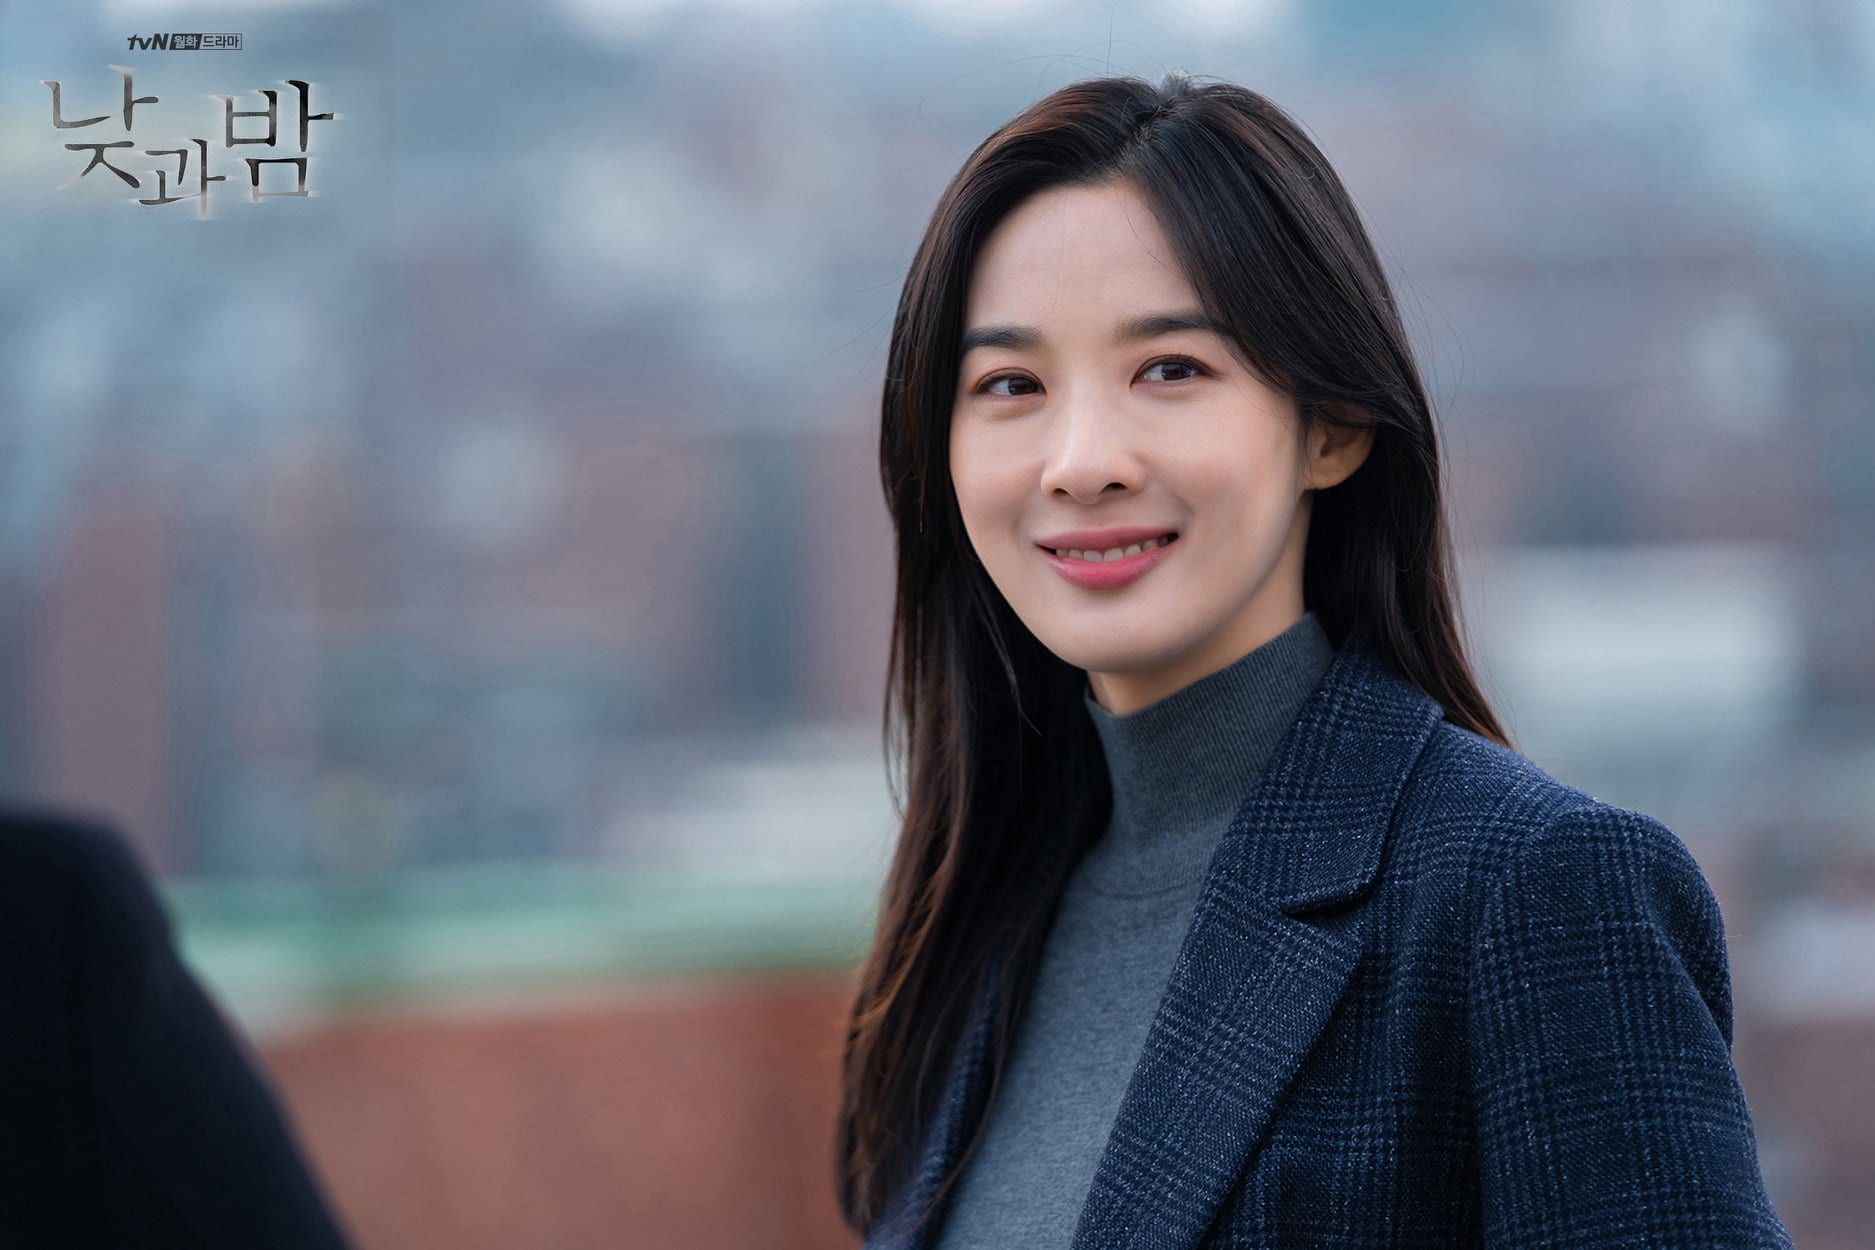 Awaken' Lee Chung Ah Says “Kim Seol Hyun's Smile is Captivating” Korean Entertainment Magazine